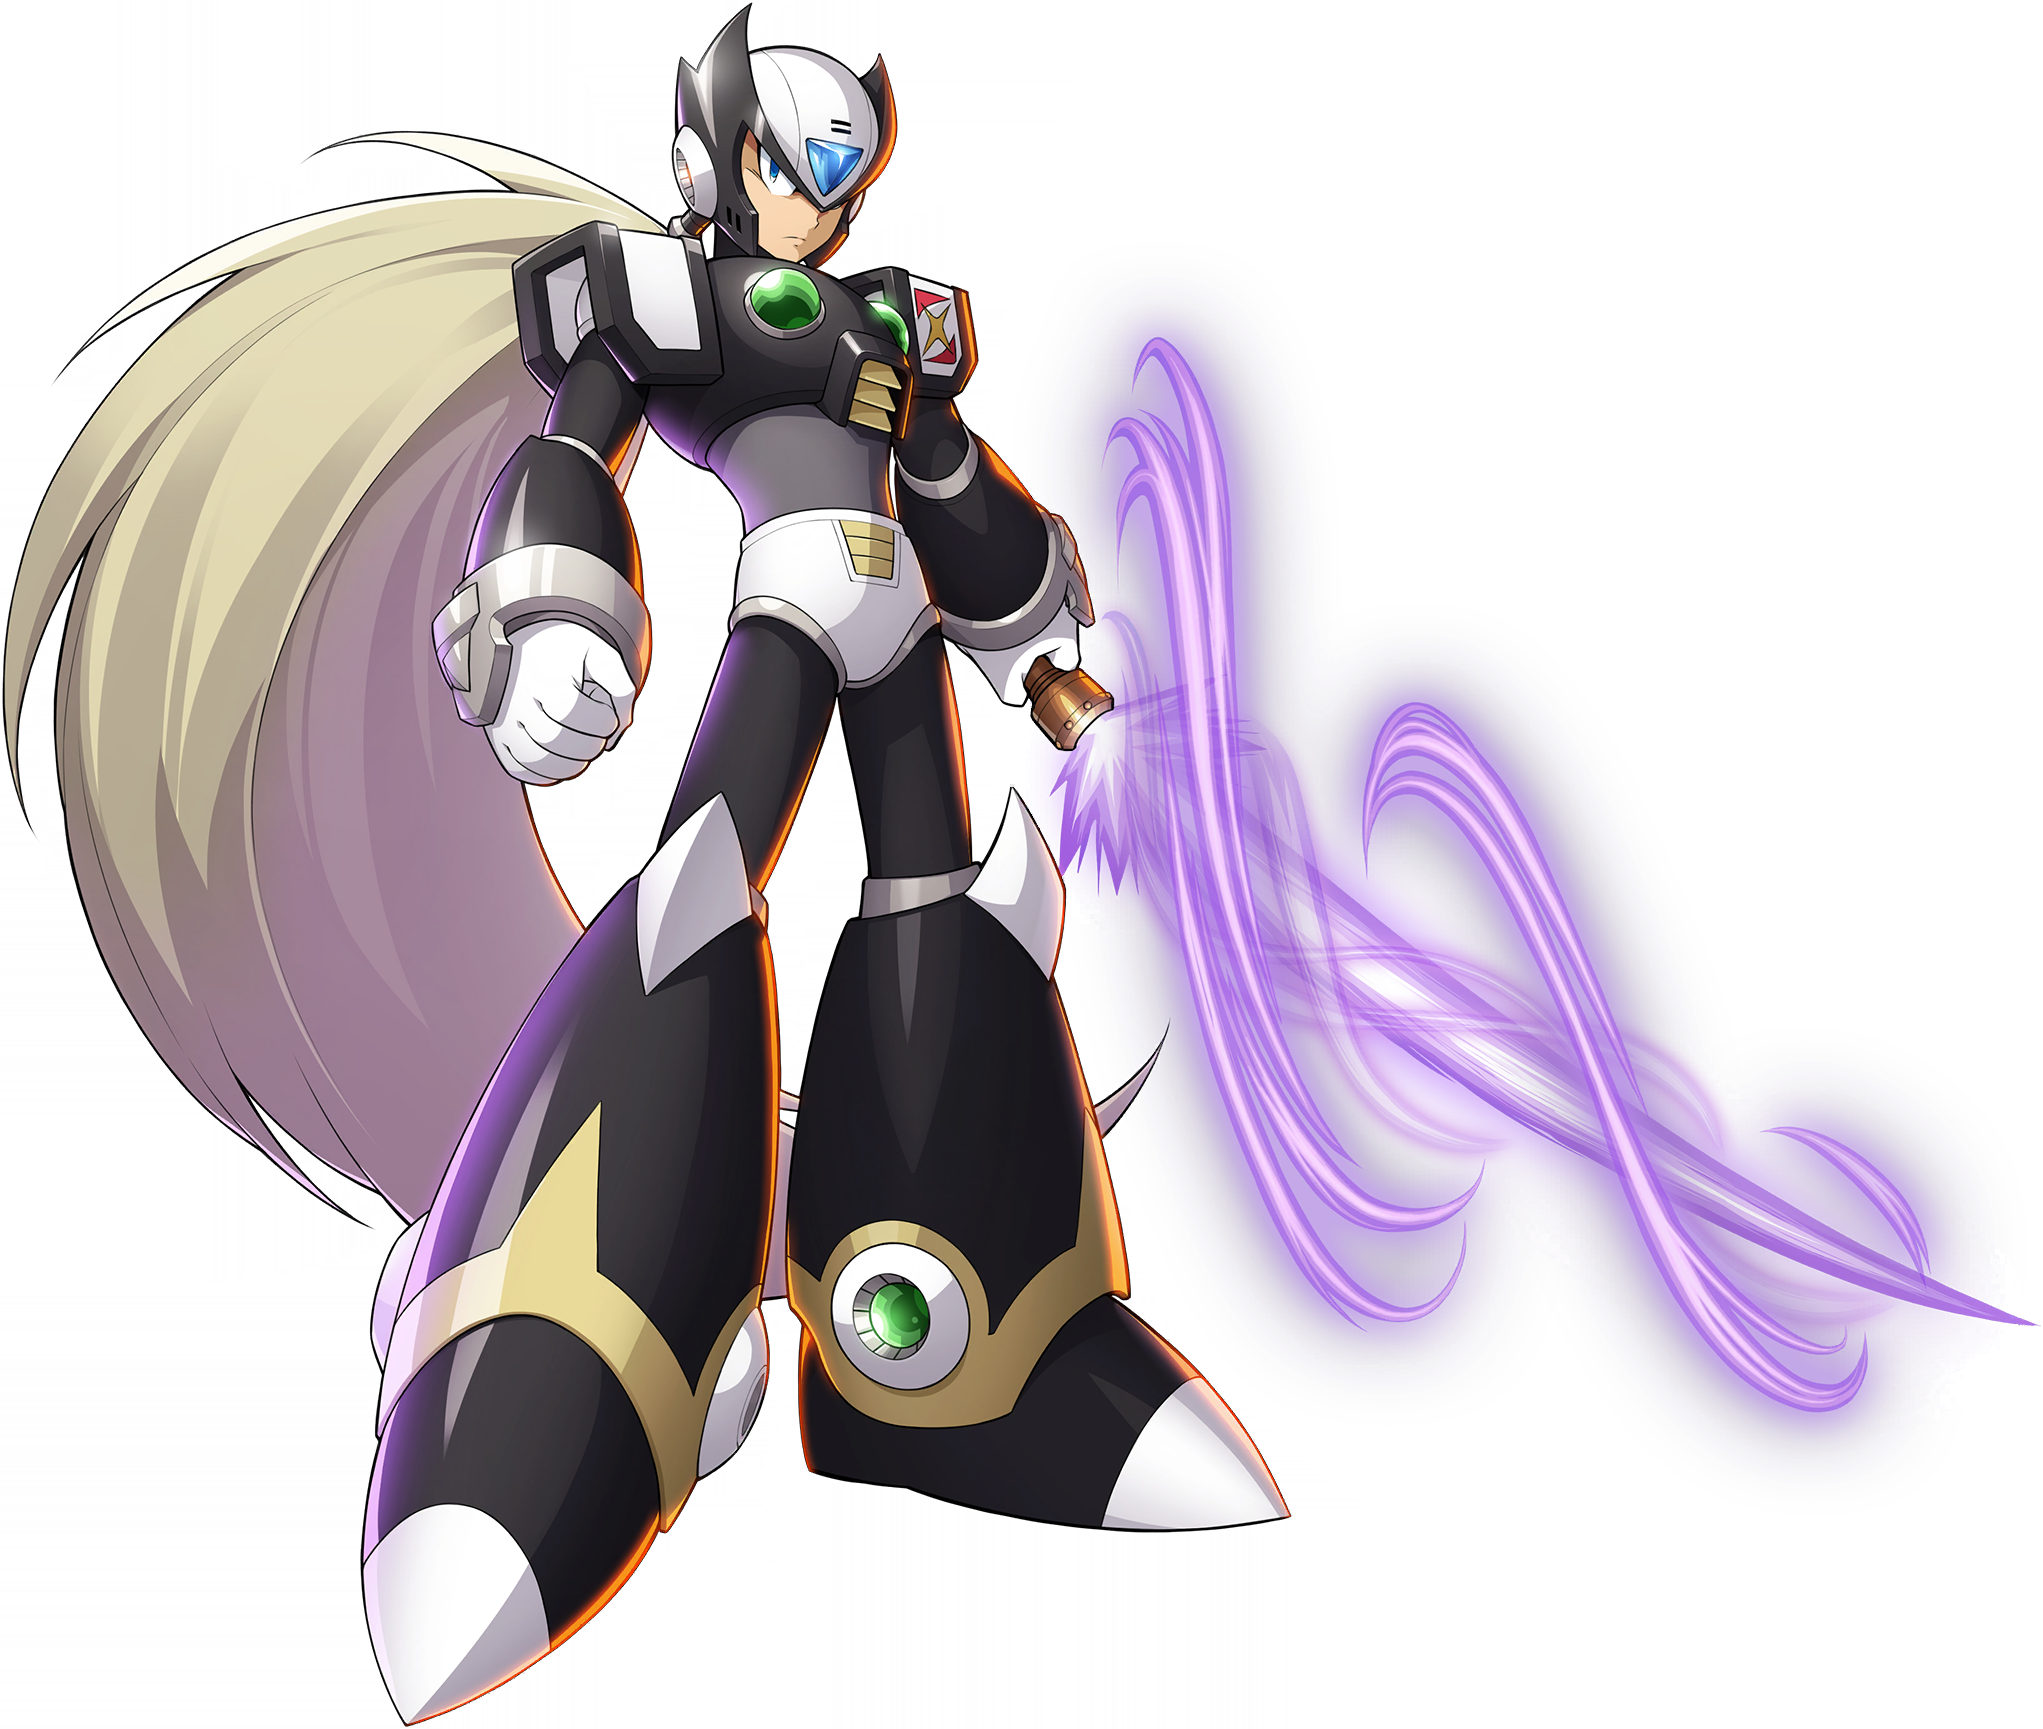 X (S-Class Hunter) 5* Character Showcase - Mega Man X DiVE 